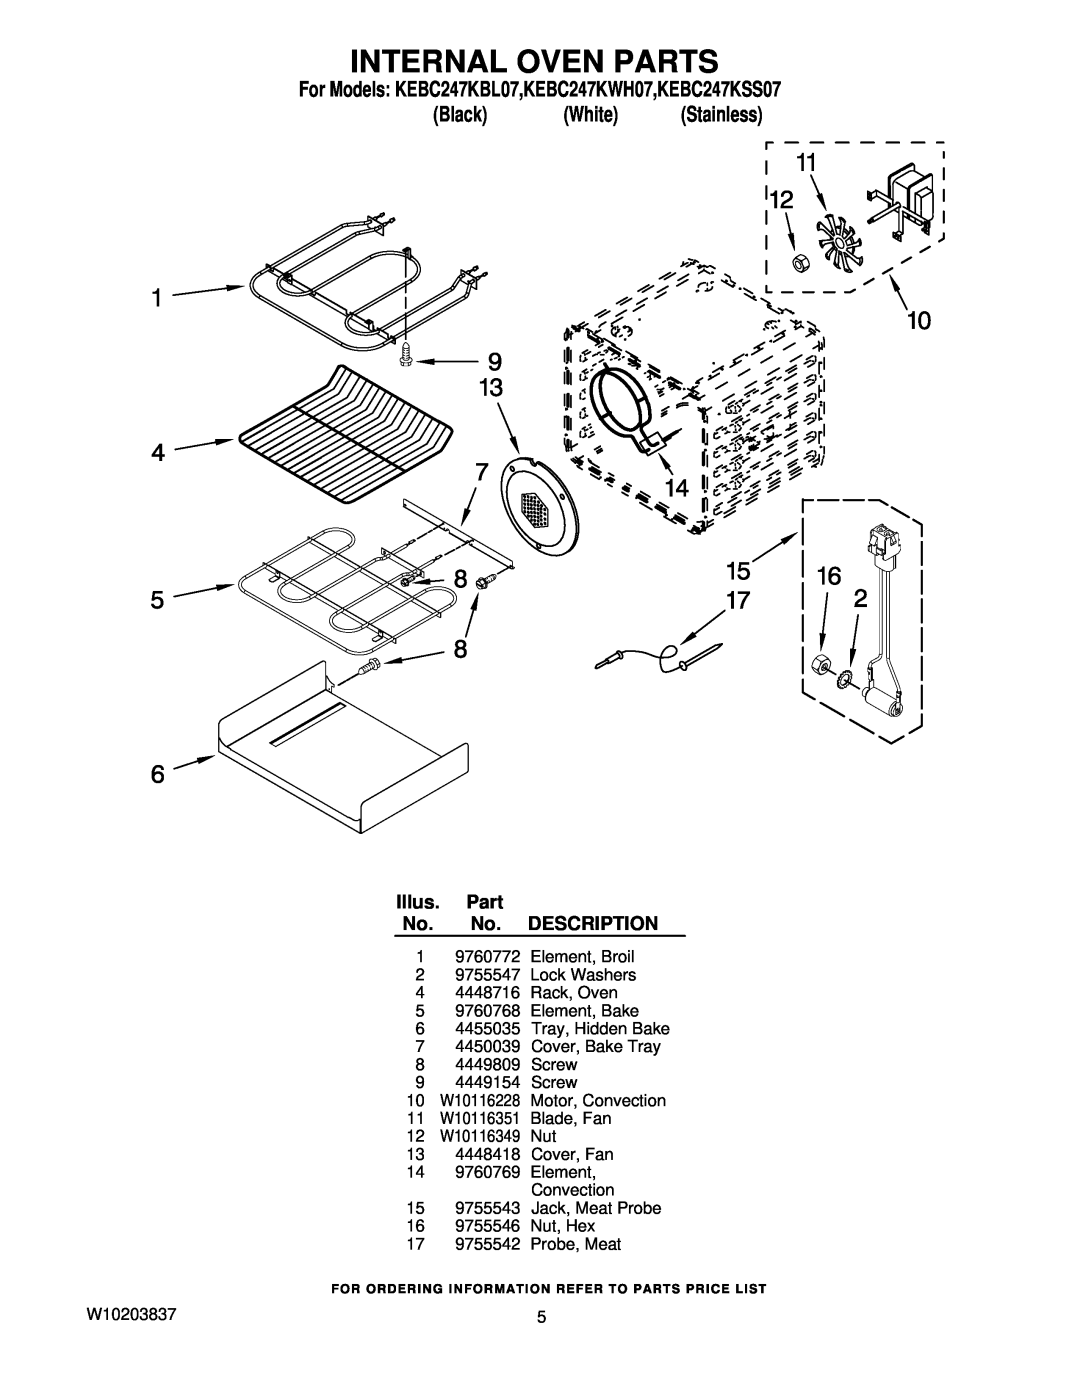 KitchenAid manual Internal Oven Parts, For Models KEBC247KBL07,KEBC247KWH07,KEBC247KSS07, Black White Stainless 